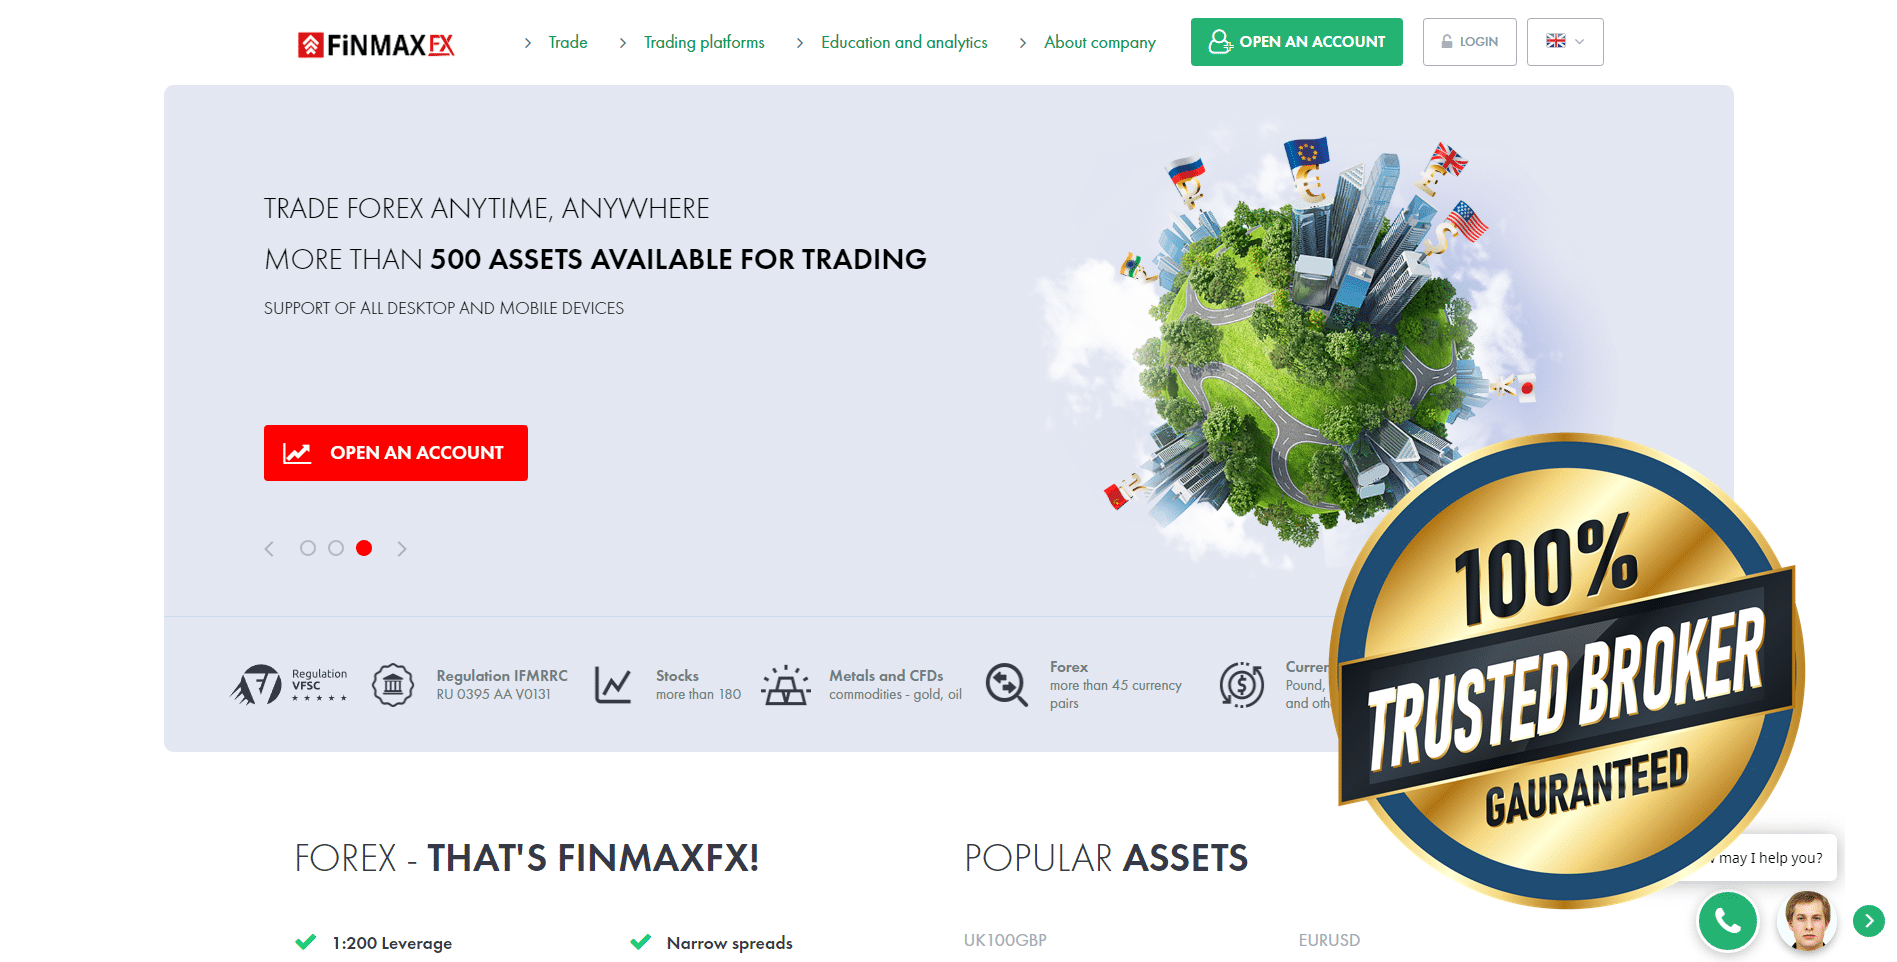 finmaxfx (finmaxfx) website